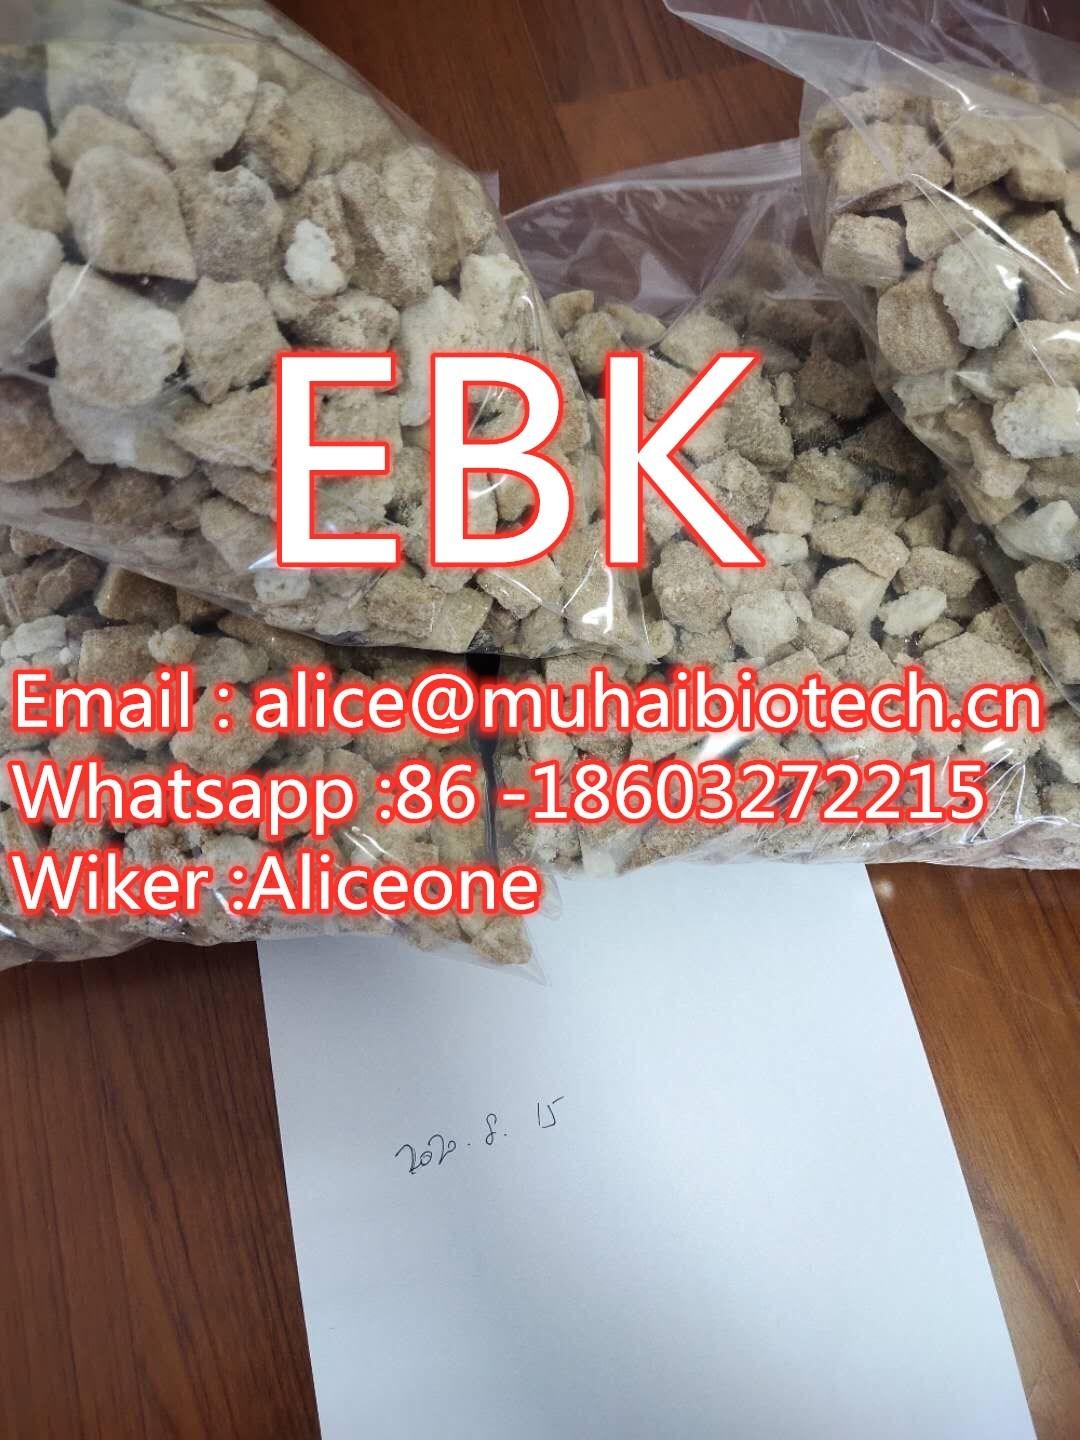 Wiker :Aliceone Newest stocks Eutylones euty eut eu EBK gbk tan crystal best qua